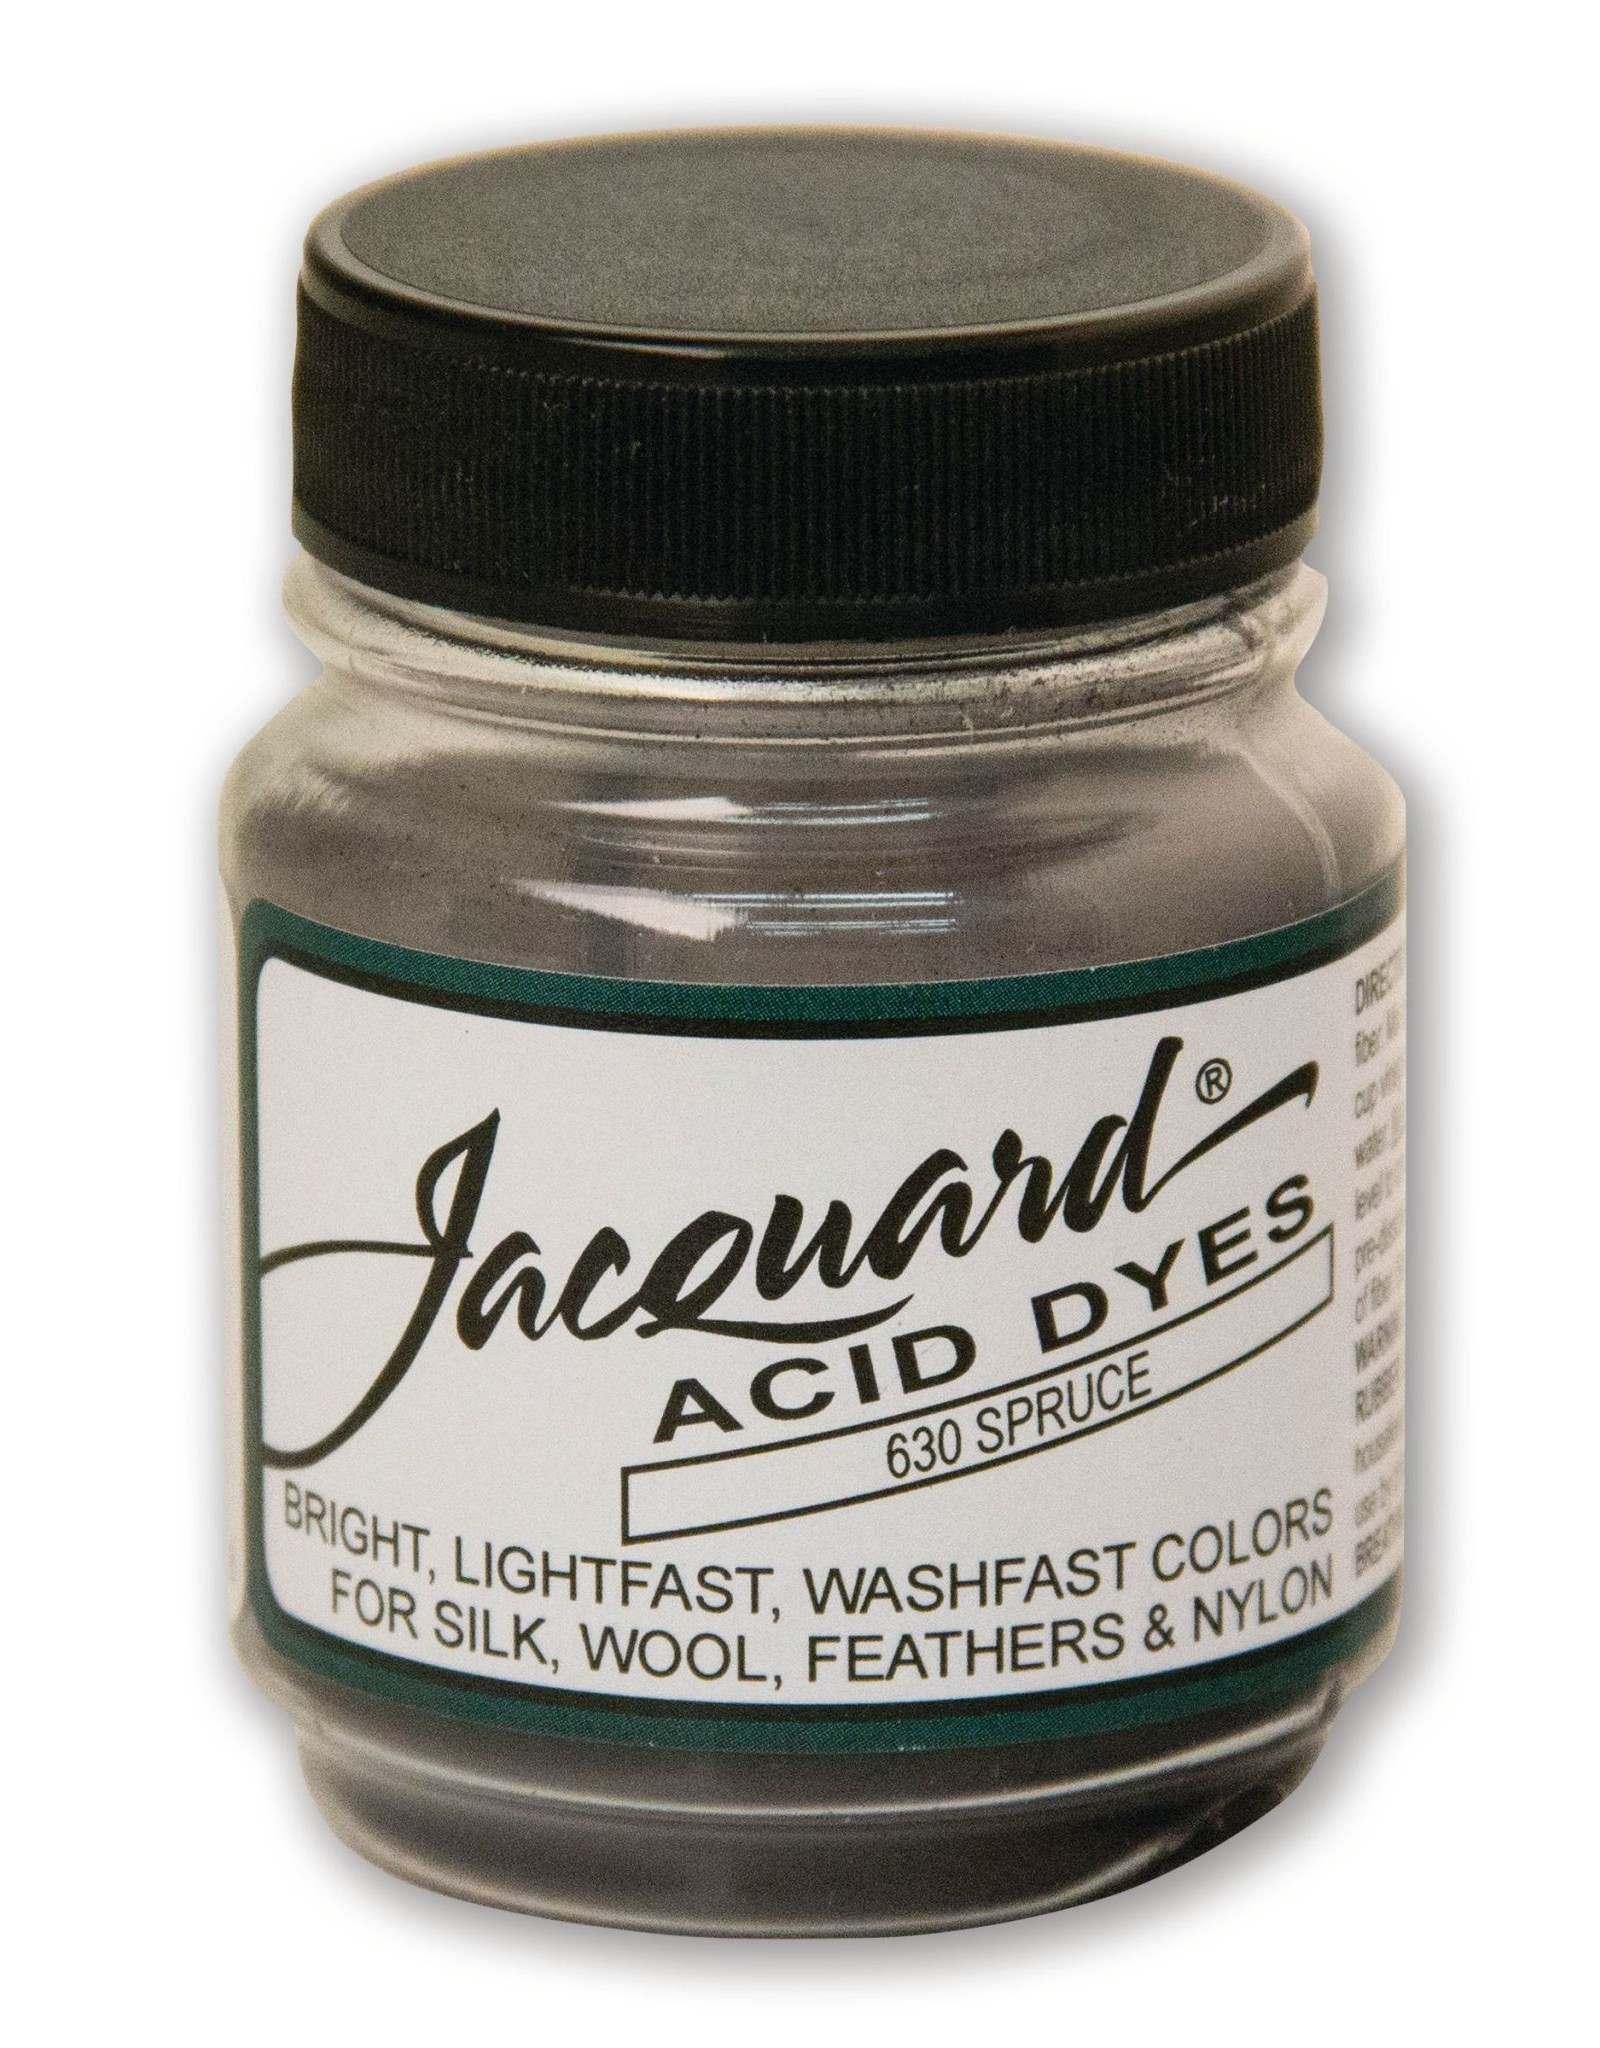 Jacquard Jacquard Acid Dye, #630 Spruce ½oz